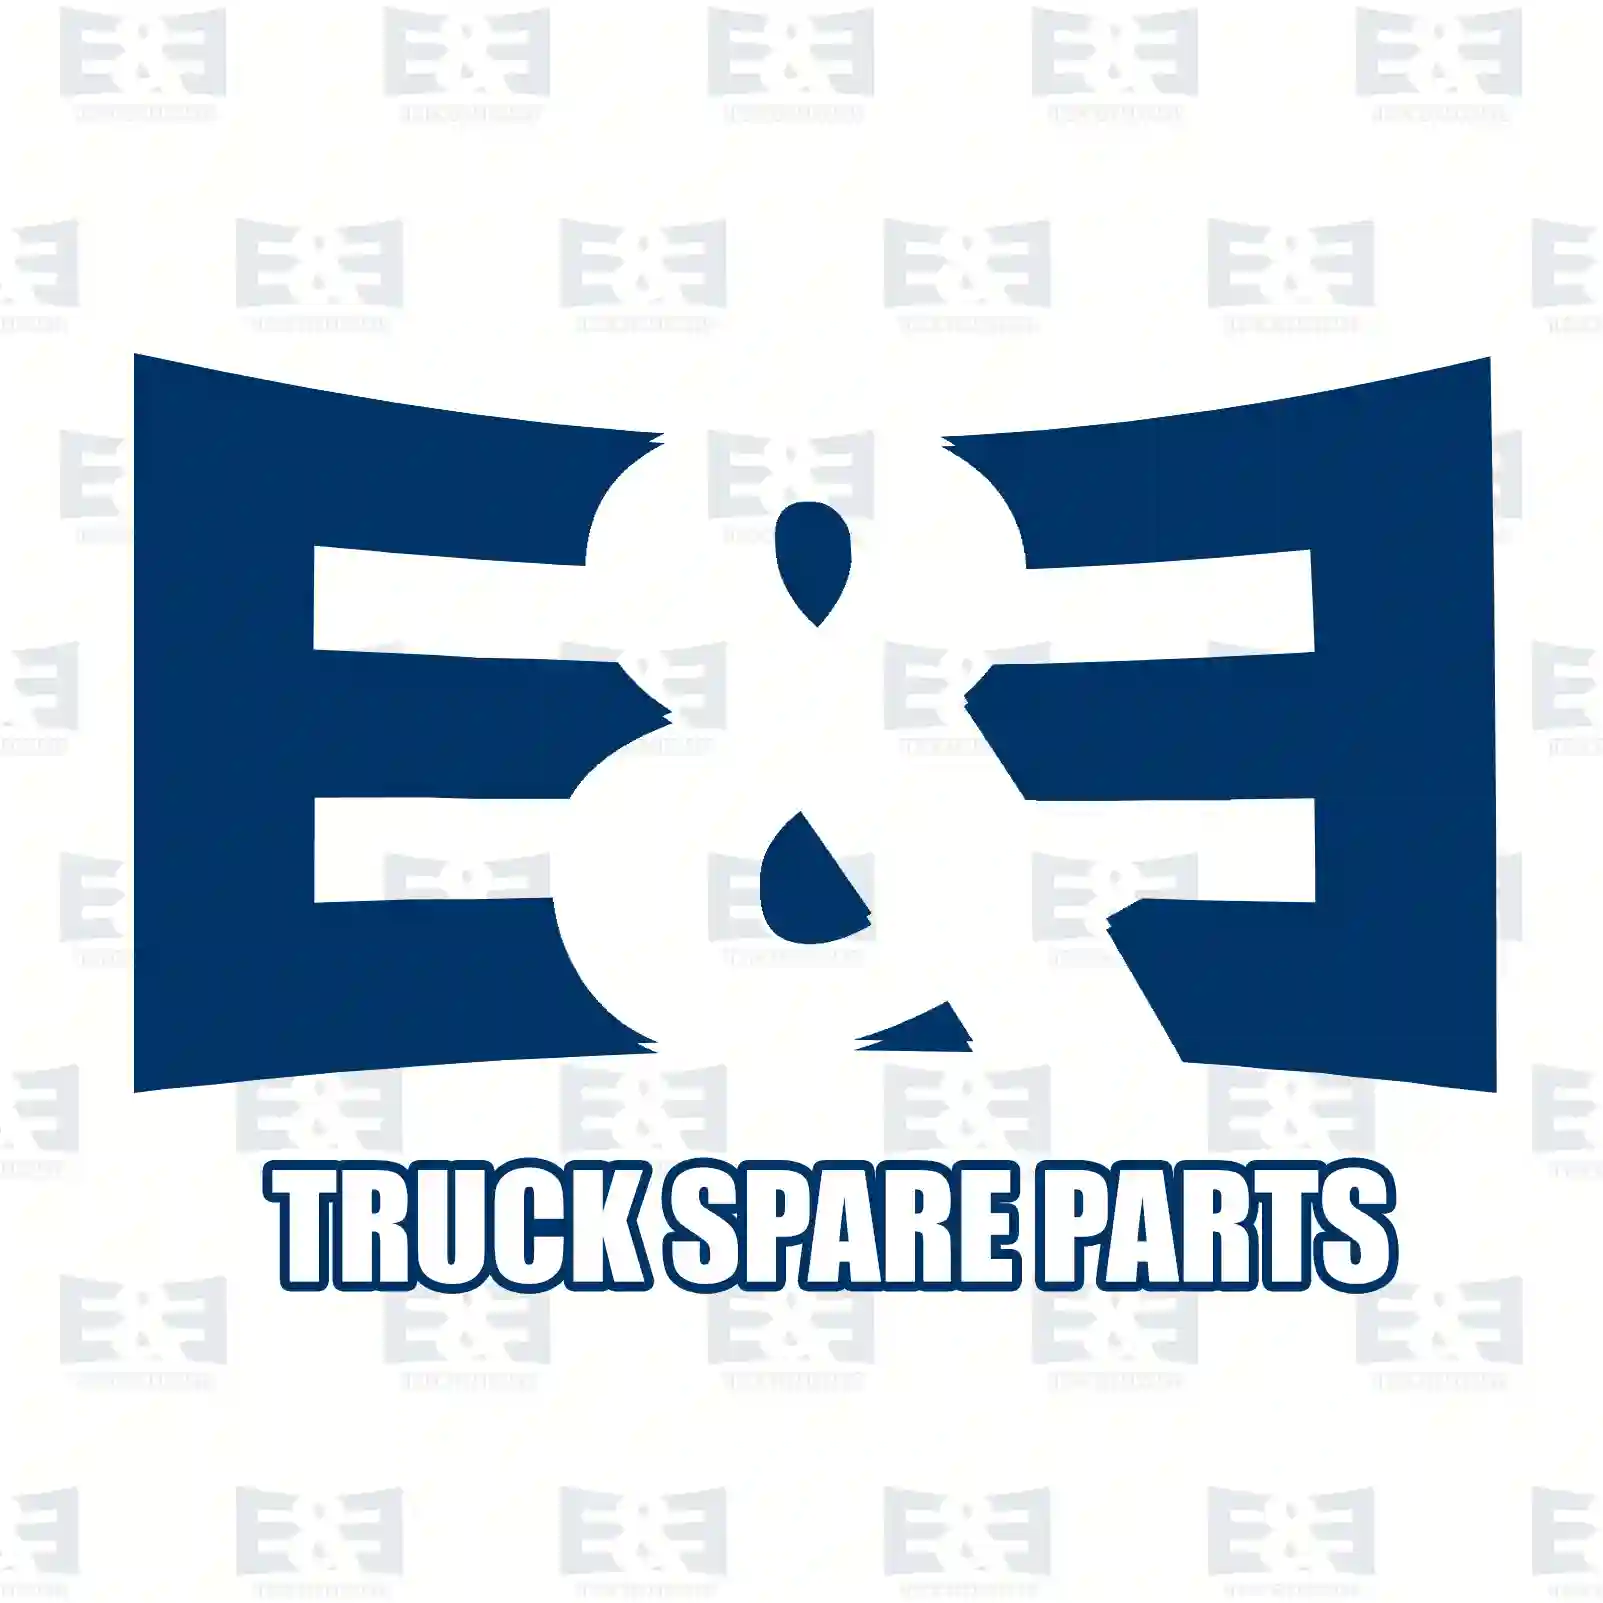 Center bearing, 2E2276688, 81394006104, 81394106020, 81394106032, 81394106037 ||  2E2276688 E&E Truck Spare Parts | Truck Spare Parts, Auotomotive Spare Parts Center bearing, 2E2276688, 81394006104, 81394106020, 81394106032, 81394106037 ||  2E2276688 E&E Truck Spare Parts | Truck Spare Parts, Auotomotive Spare Parts